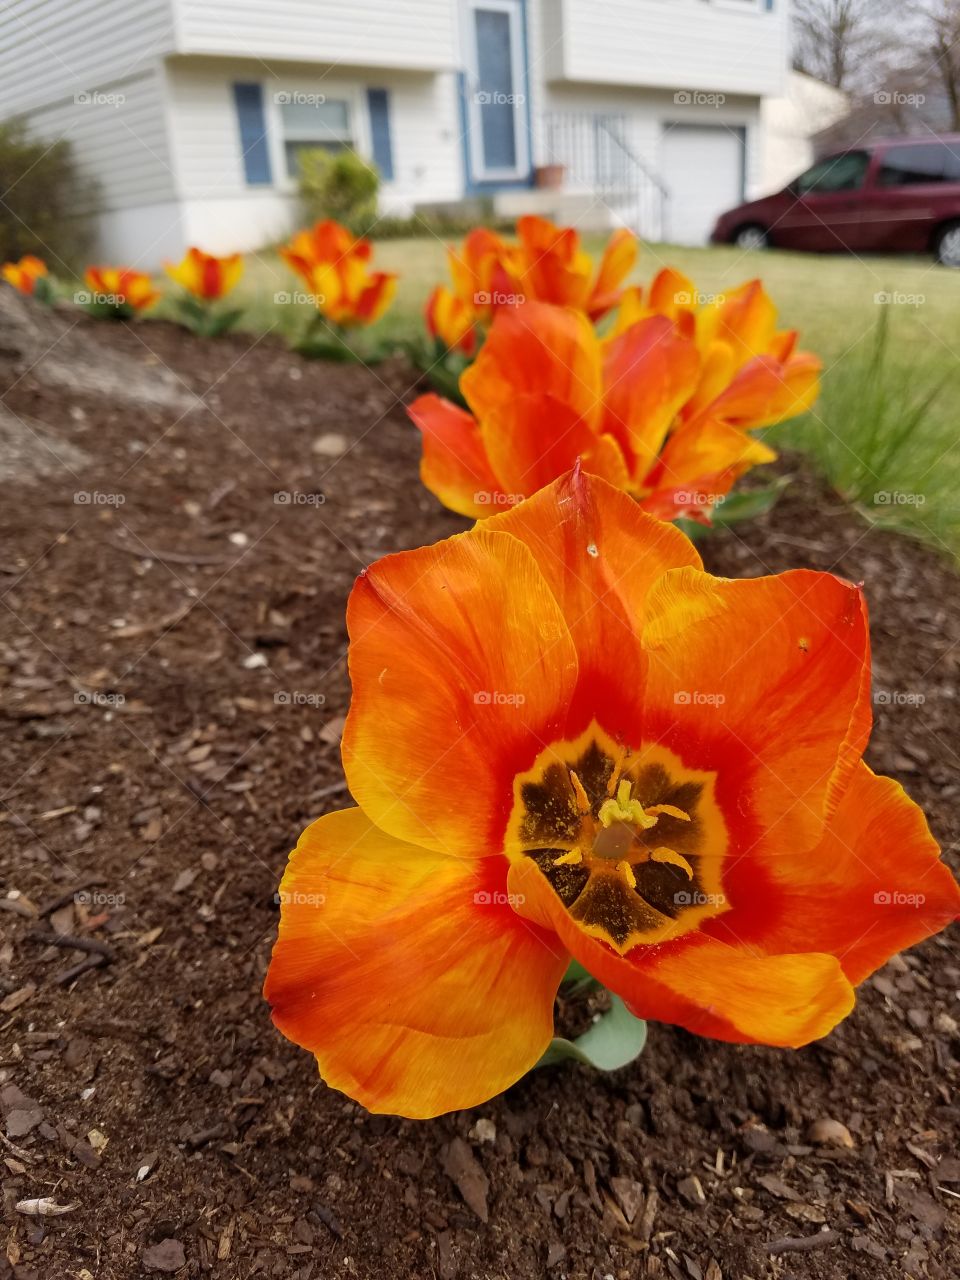 Short stem tulips